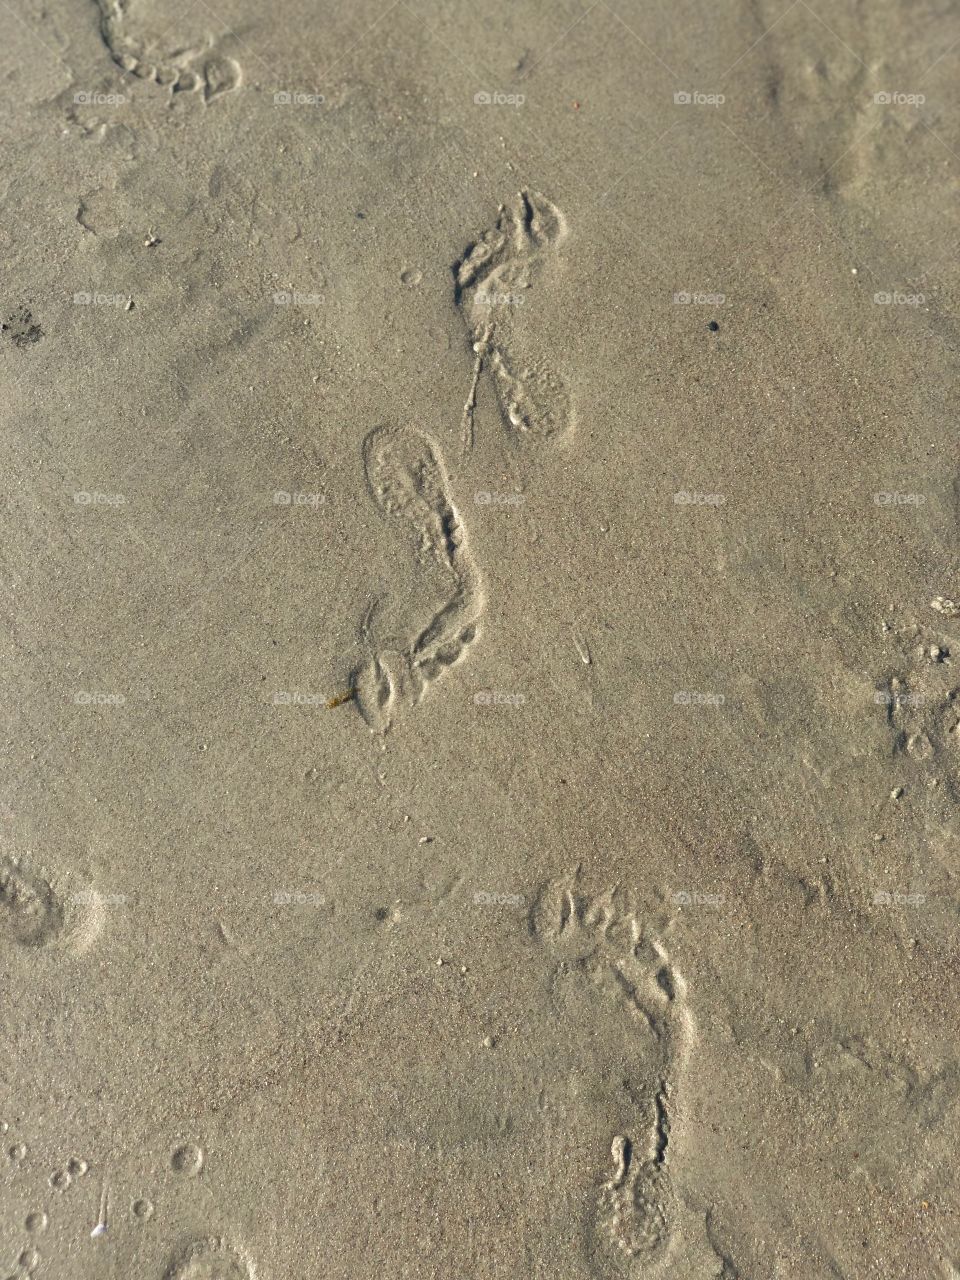 Footprints 👣